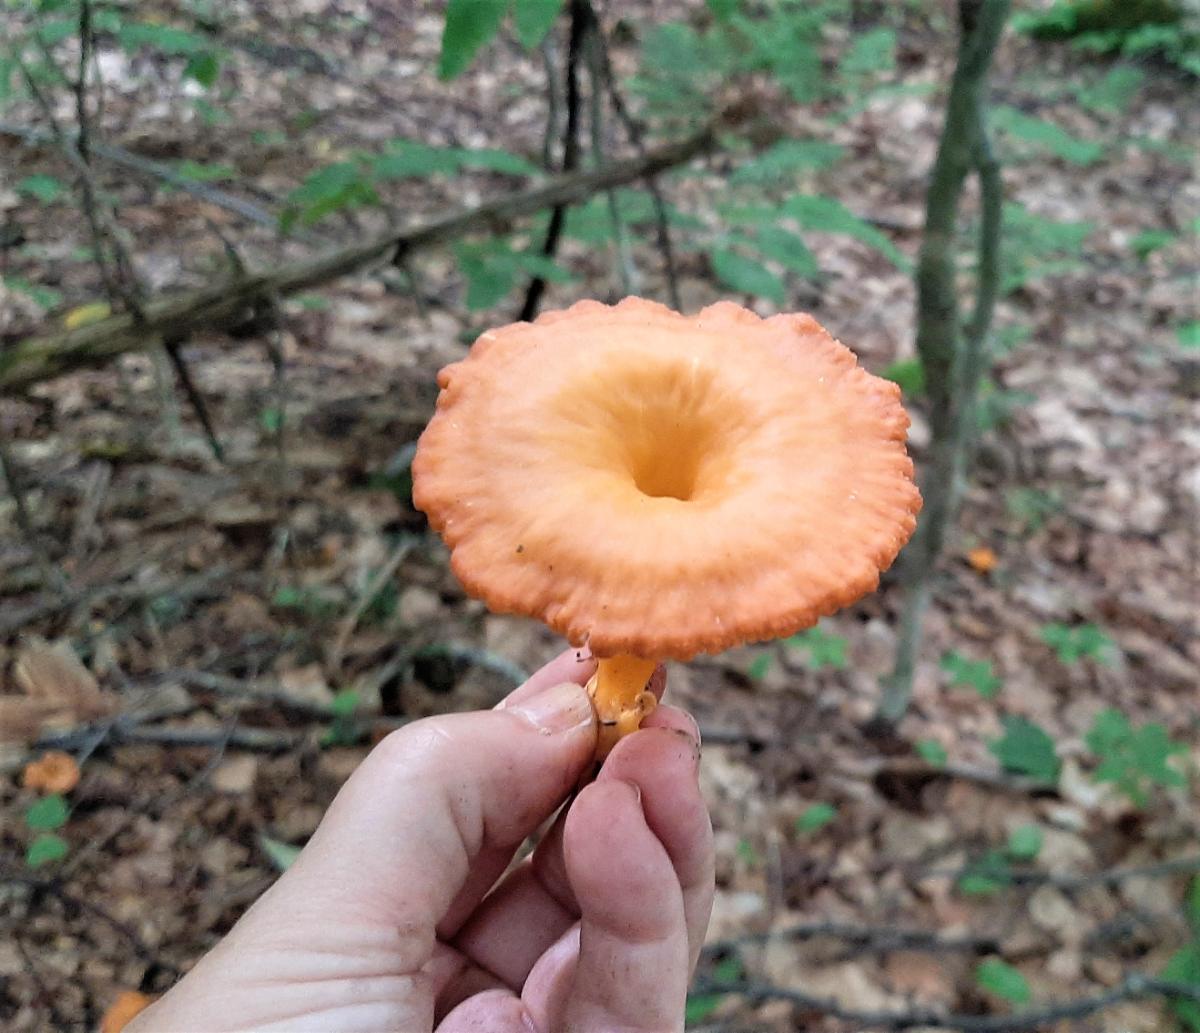 Yellowfoot mushroom in a hand.